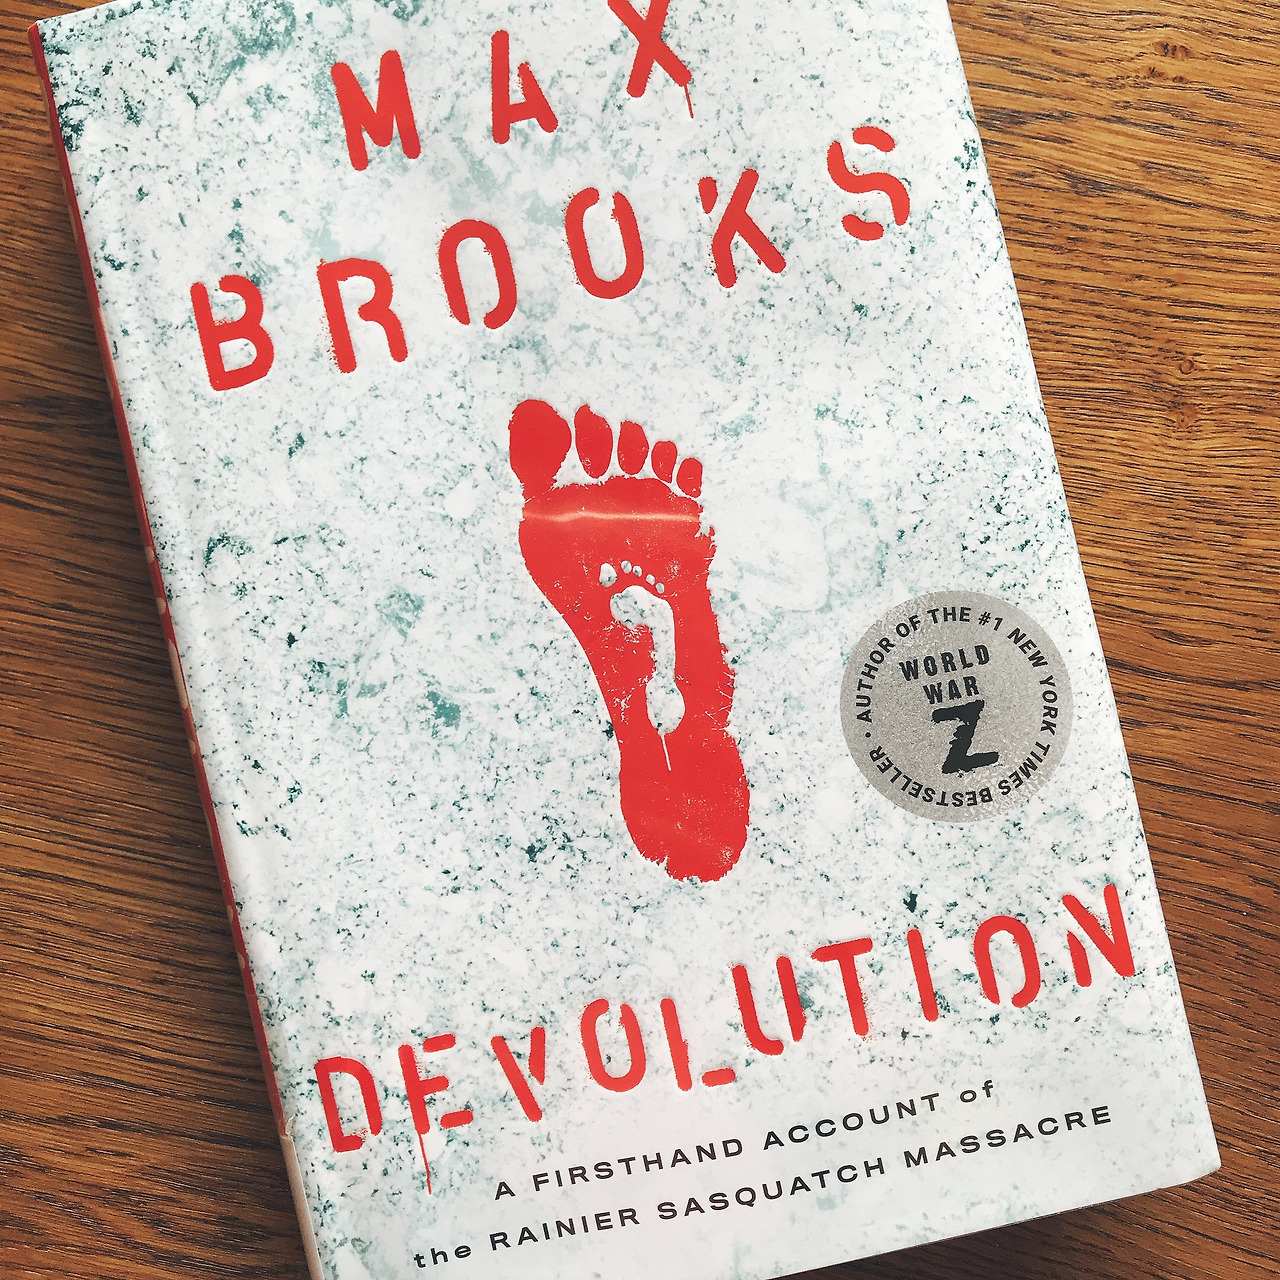 Devolution by Max Brooks